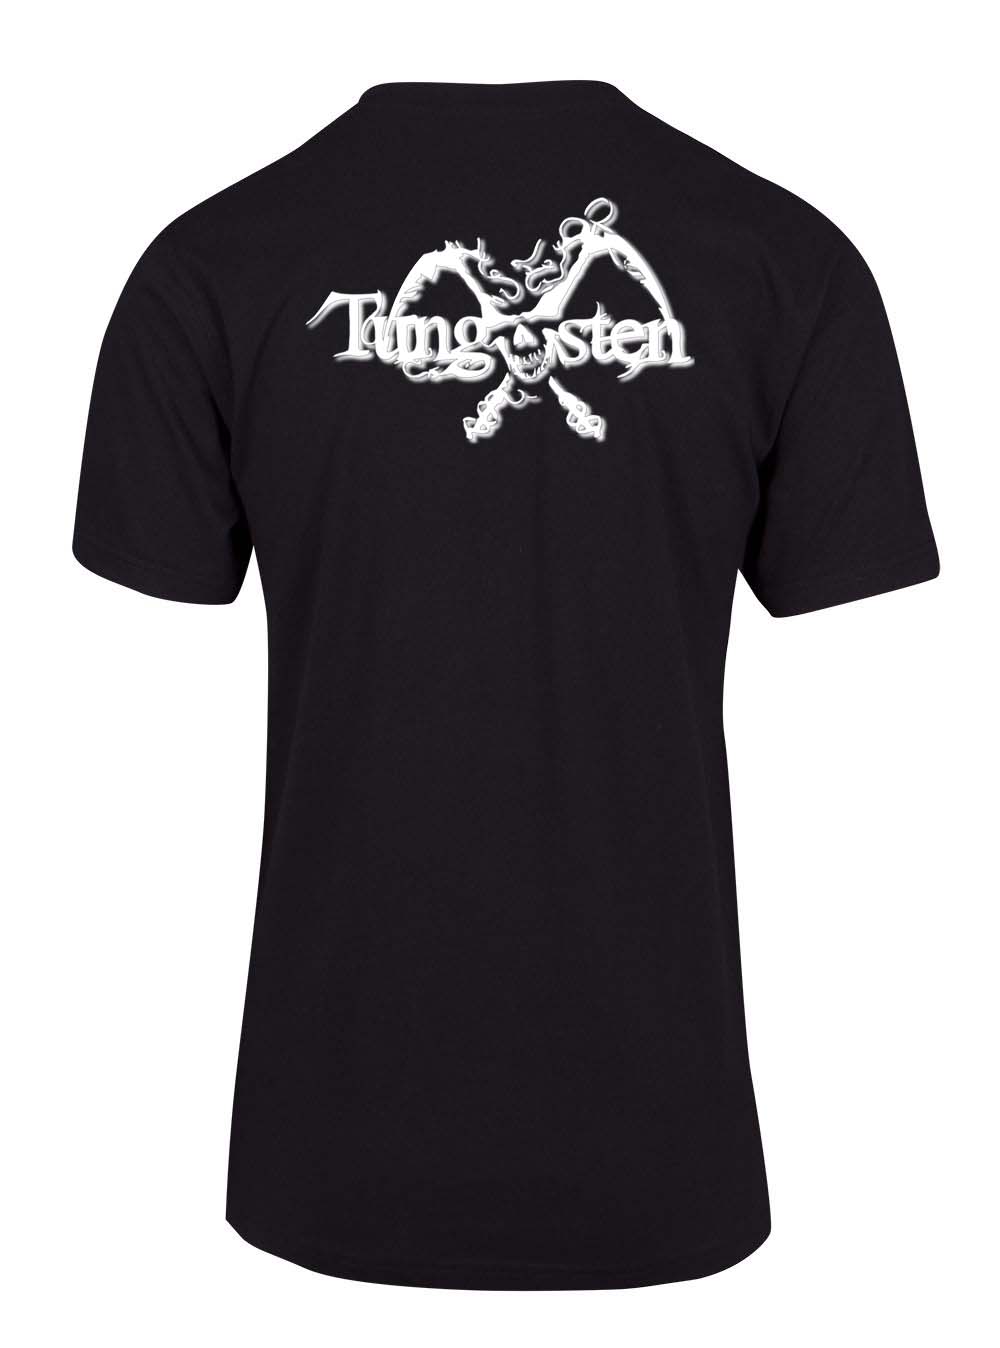 Infinity Records - Tungxsten Double Sided Logo T-Shirt